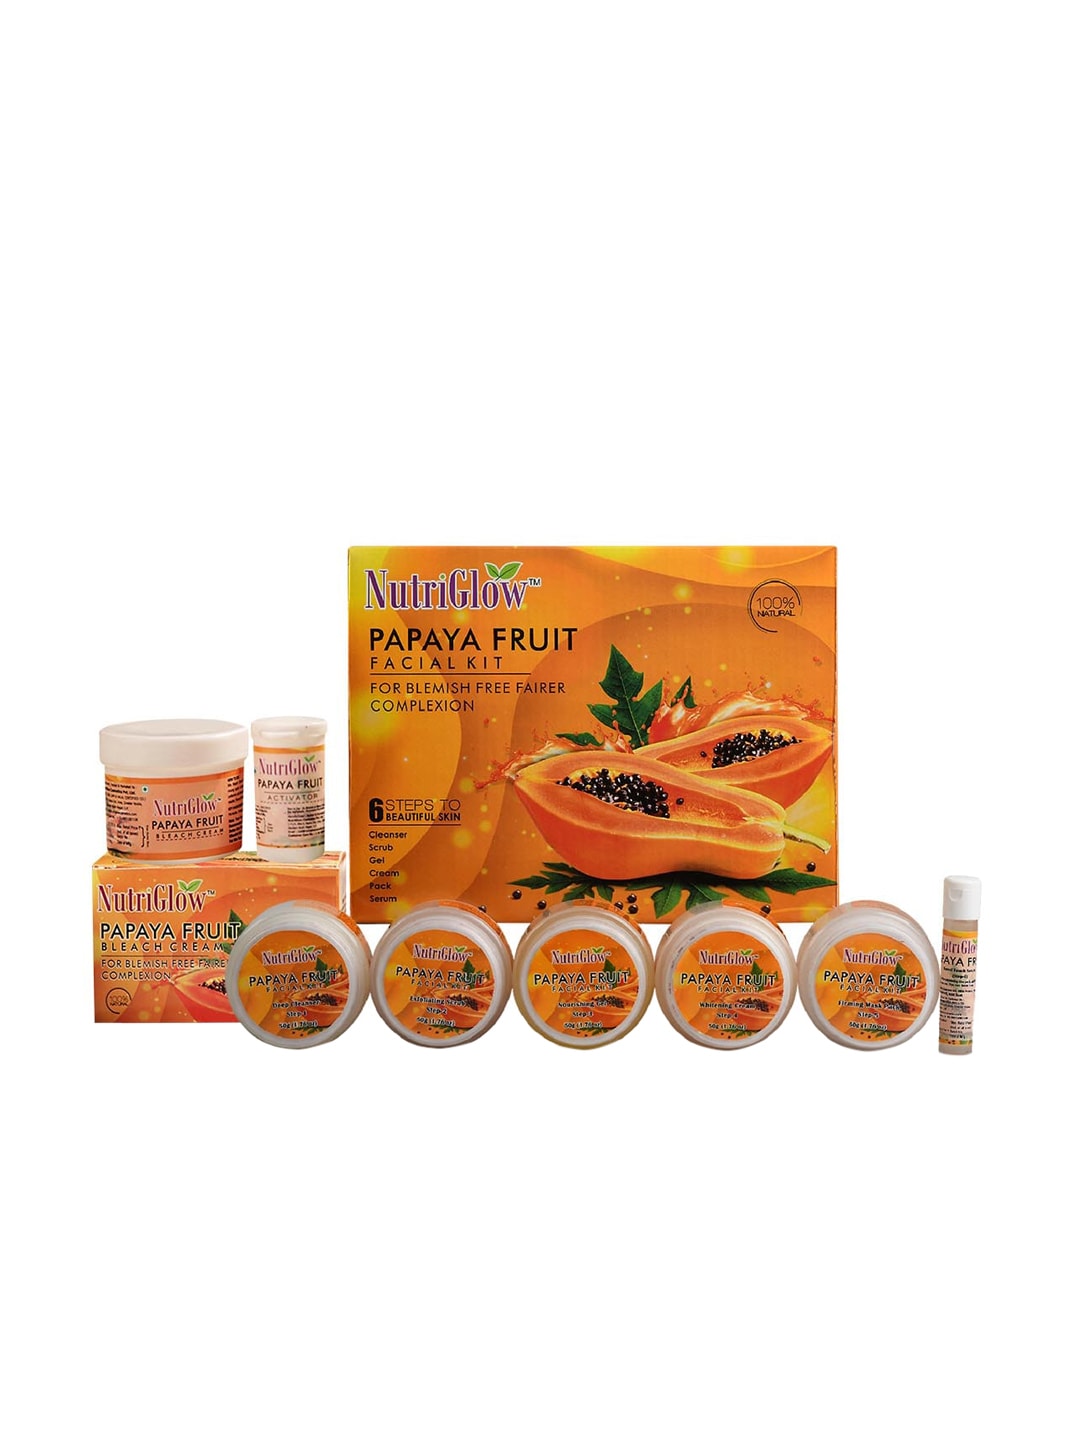 NutriGlow Papaya Fruit Facial Kit -260gm & Bleach Cream- 43gm